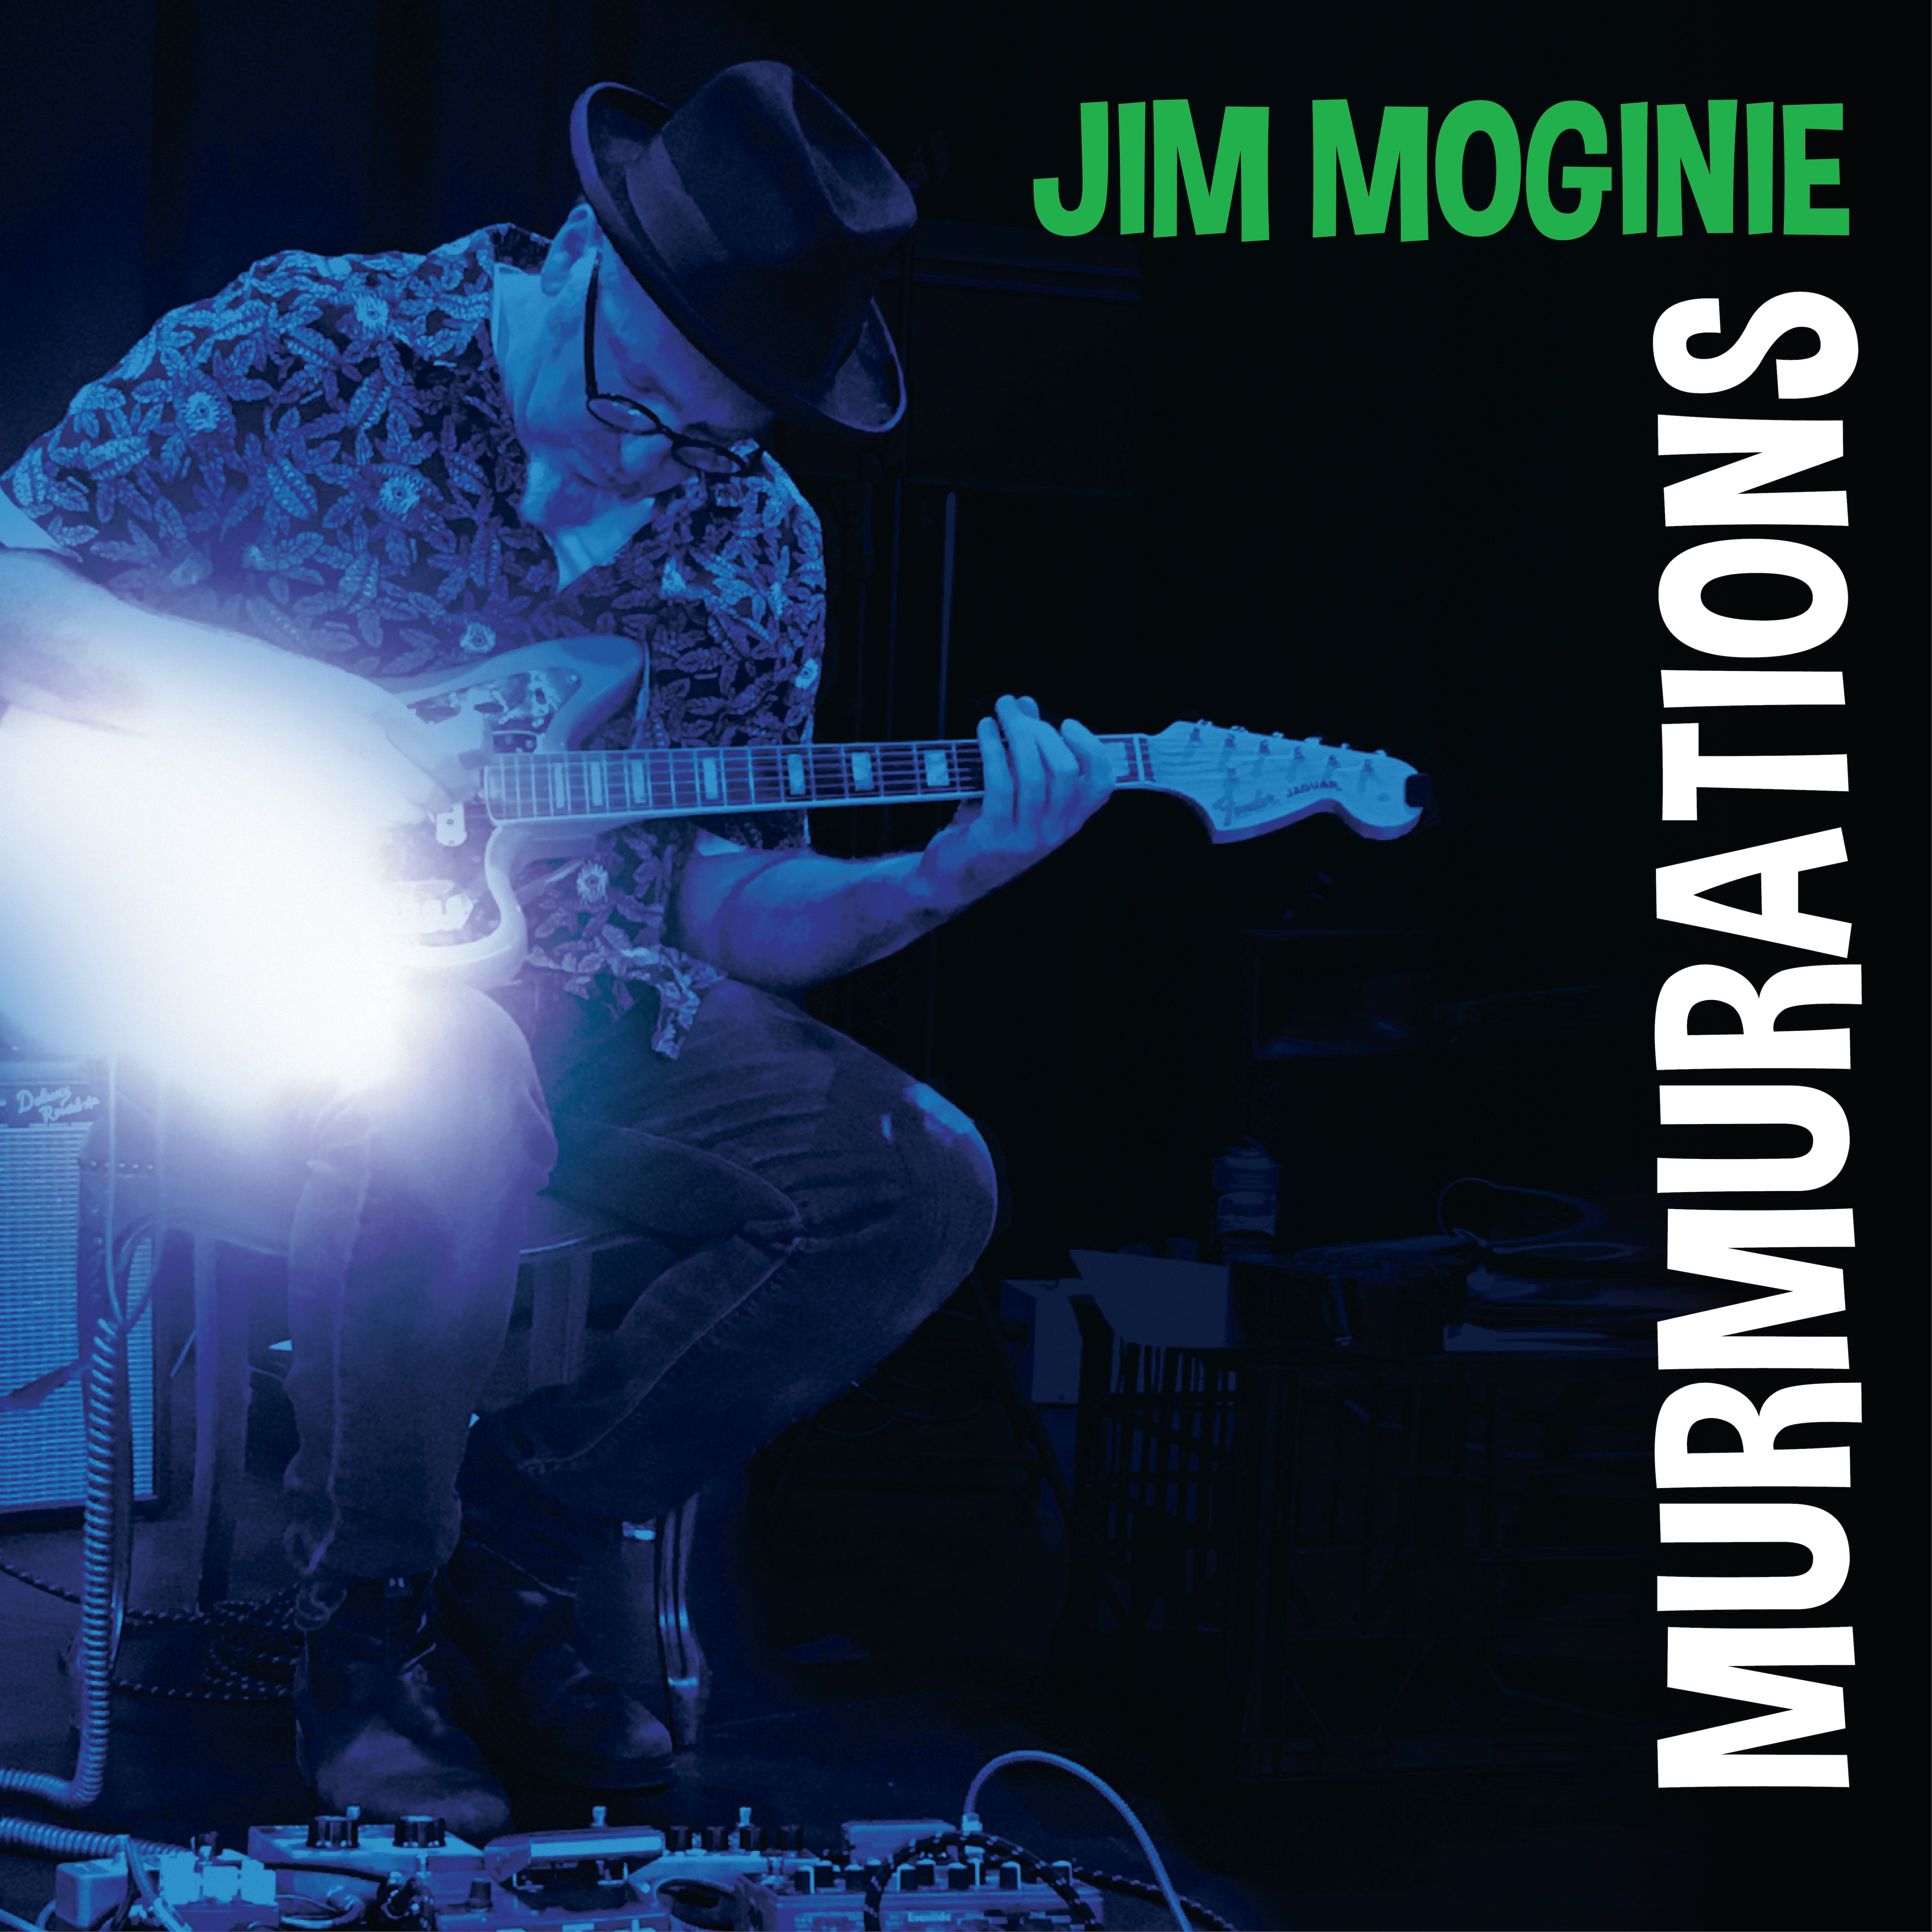 Jim Moginie plays an electric guitar